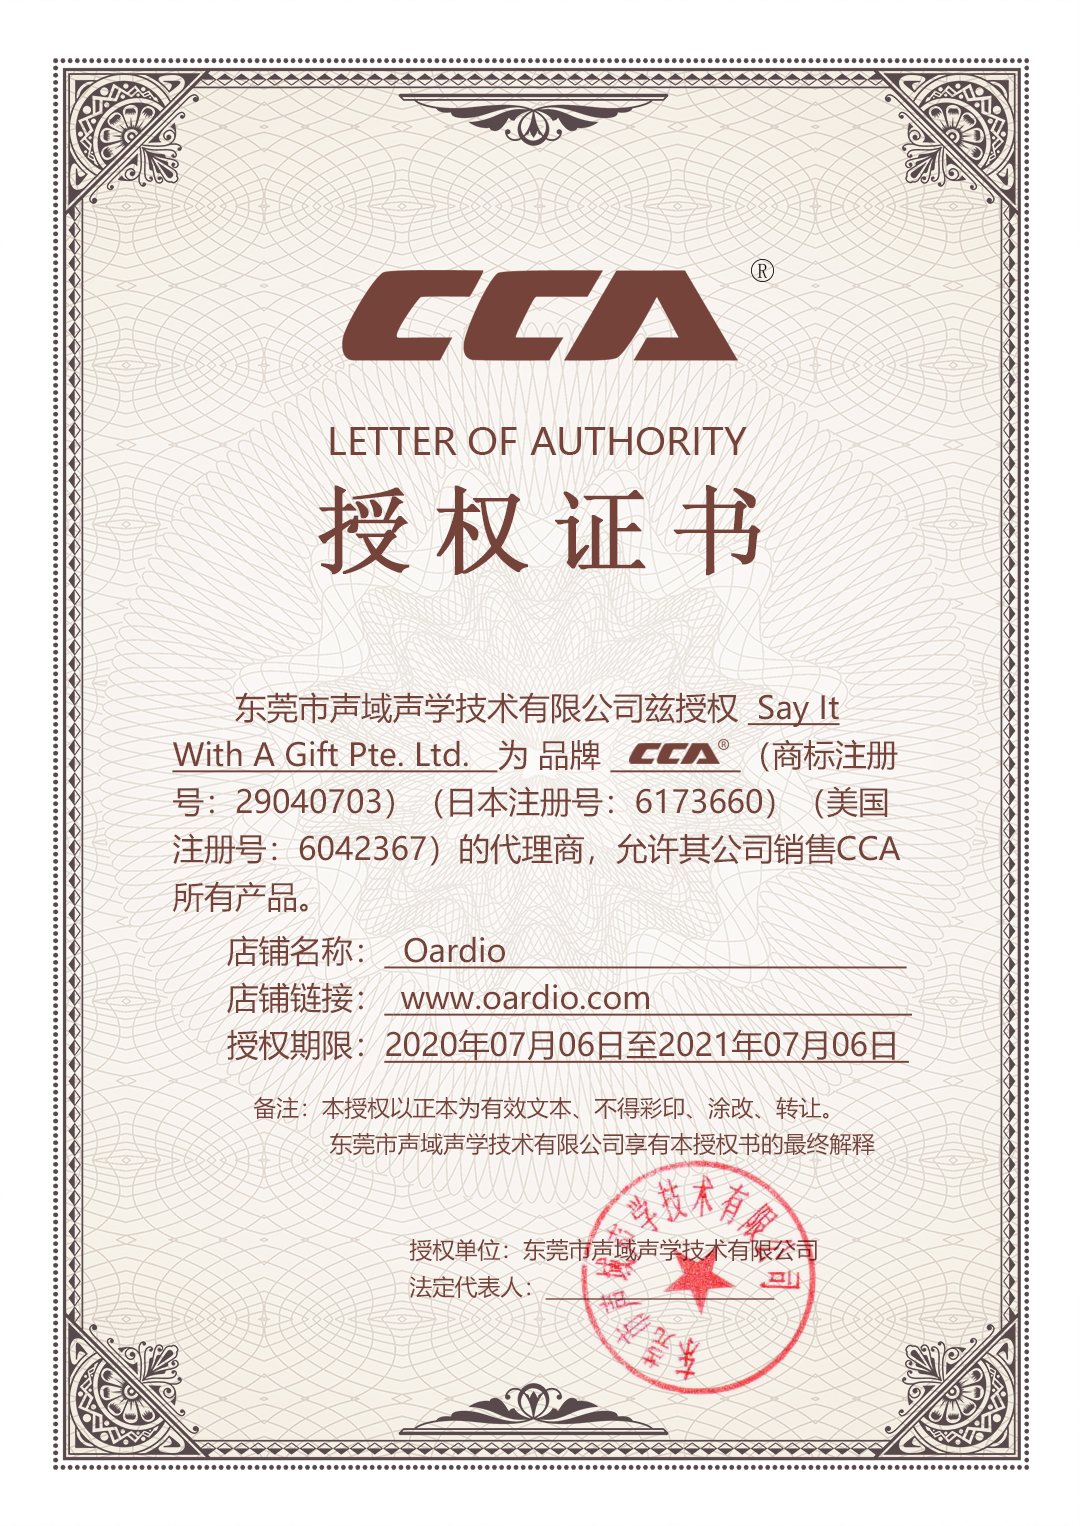 CCA Authorized Distributor Singapore Agent Certificate Clear Concept Audio Oardio